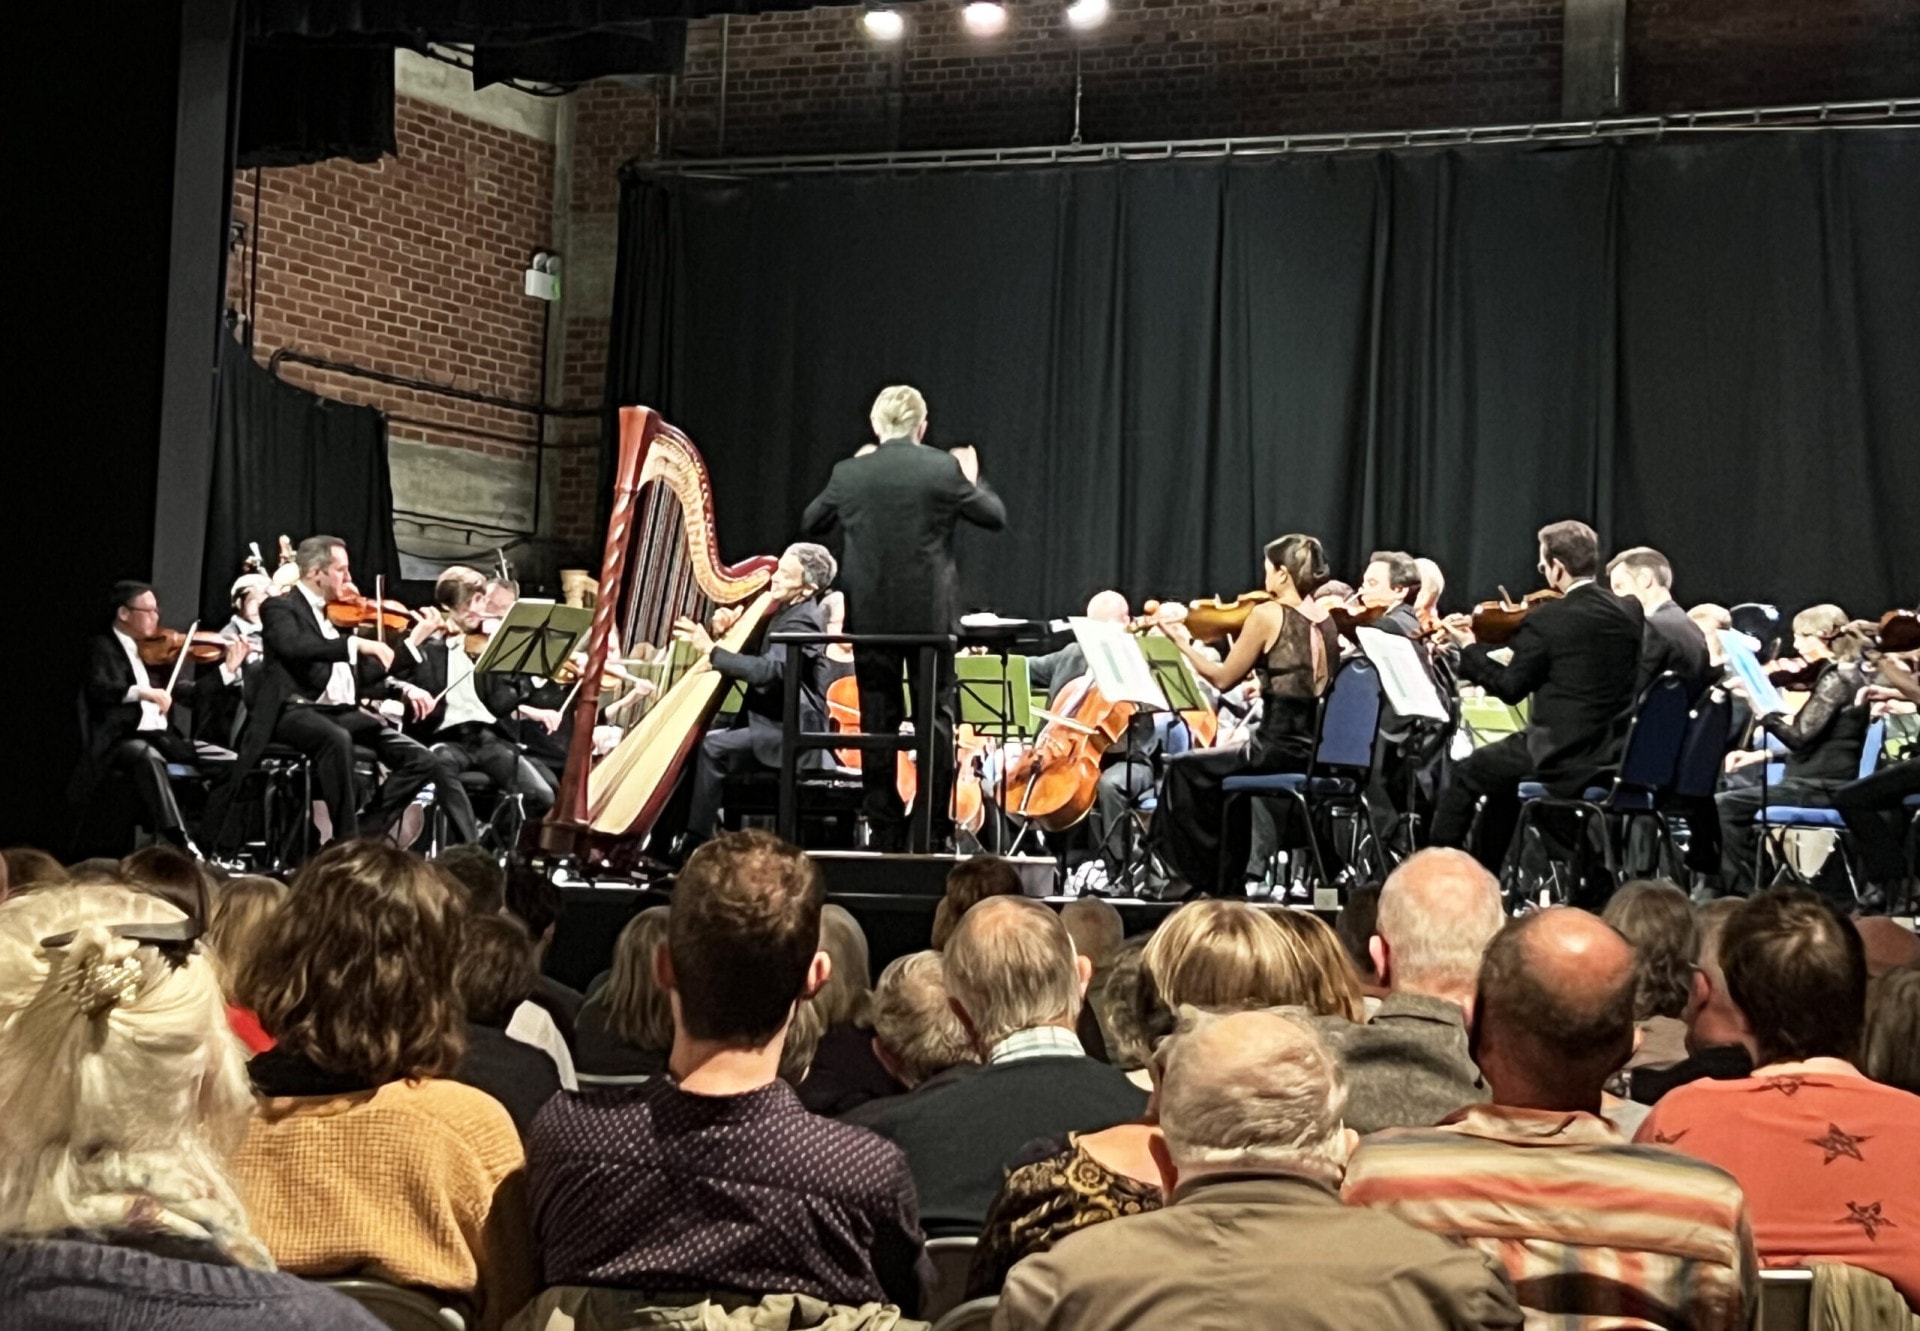 The LA Philharmonic’s Principal Harp, Emmanuel Ceysson, joins Kirill Karabits and the BSO at Exeter’s Corn Exchange 